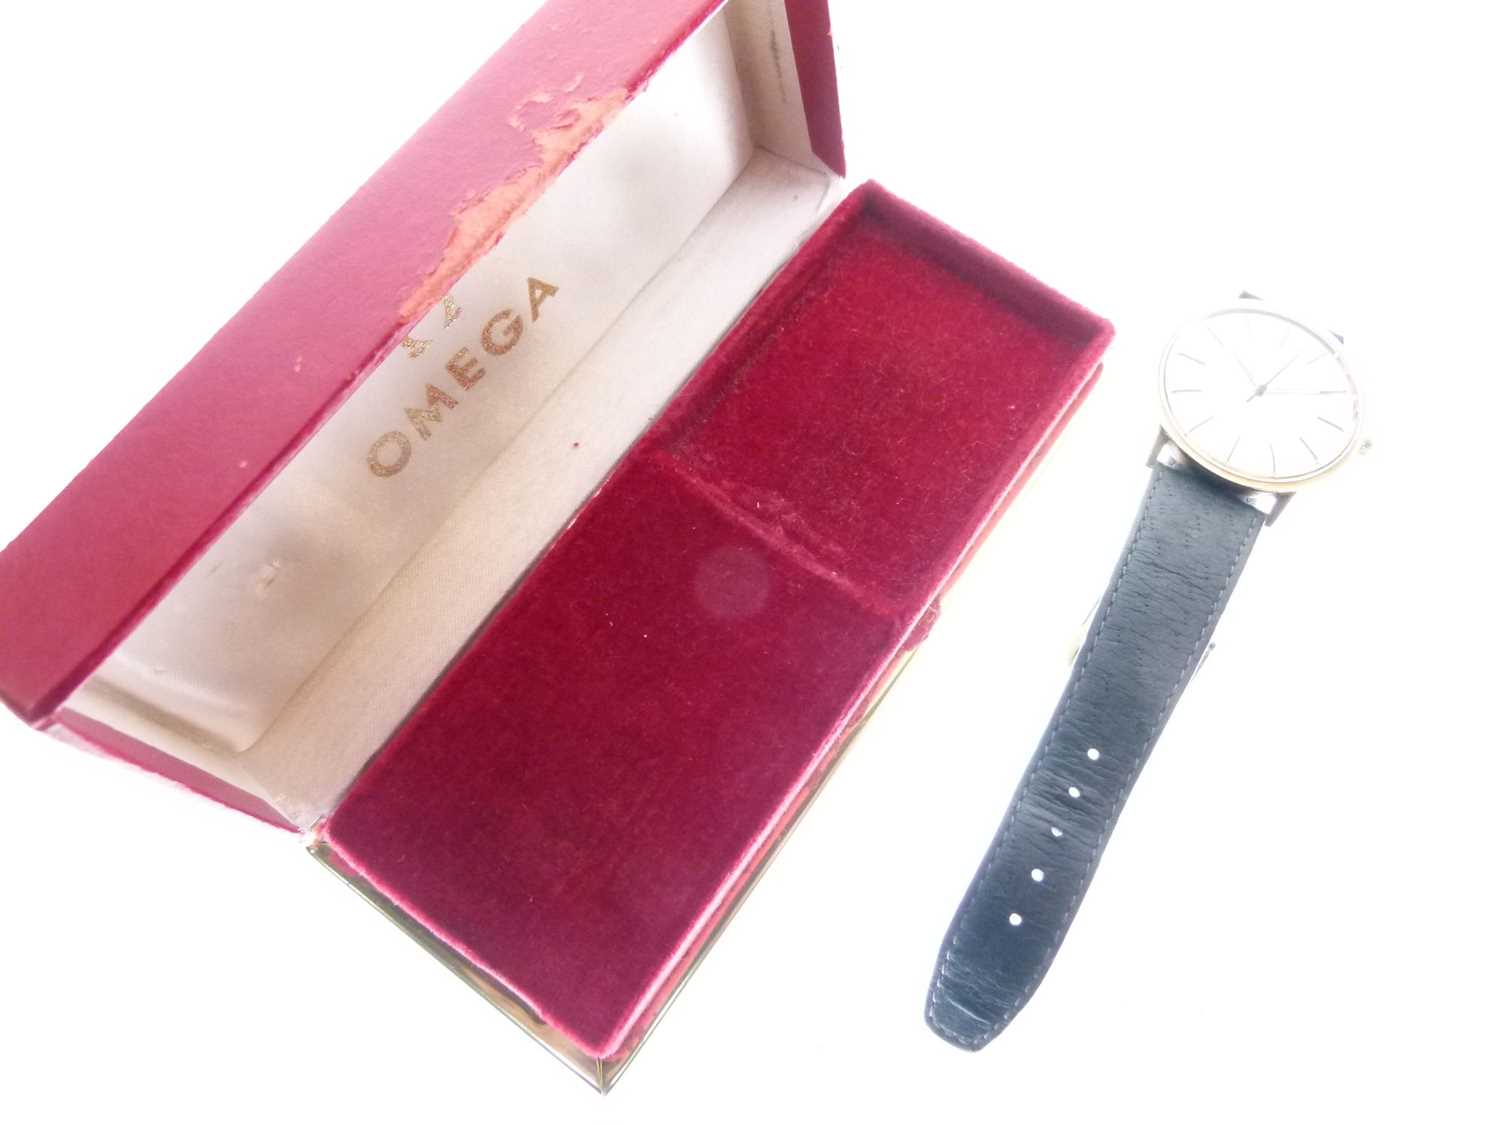 Omega - Gentleman's Automatic De Ville wristwatch - Image 6 of 8